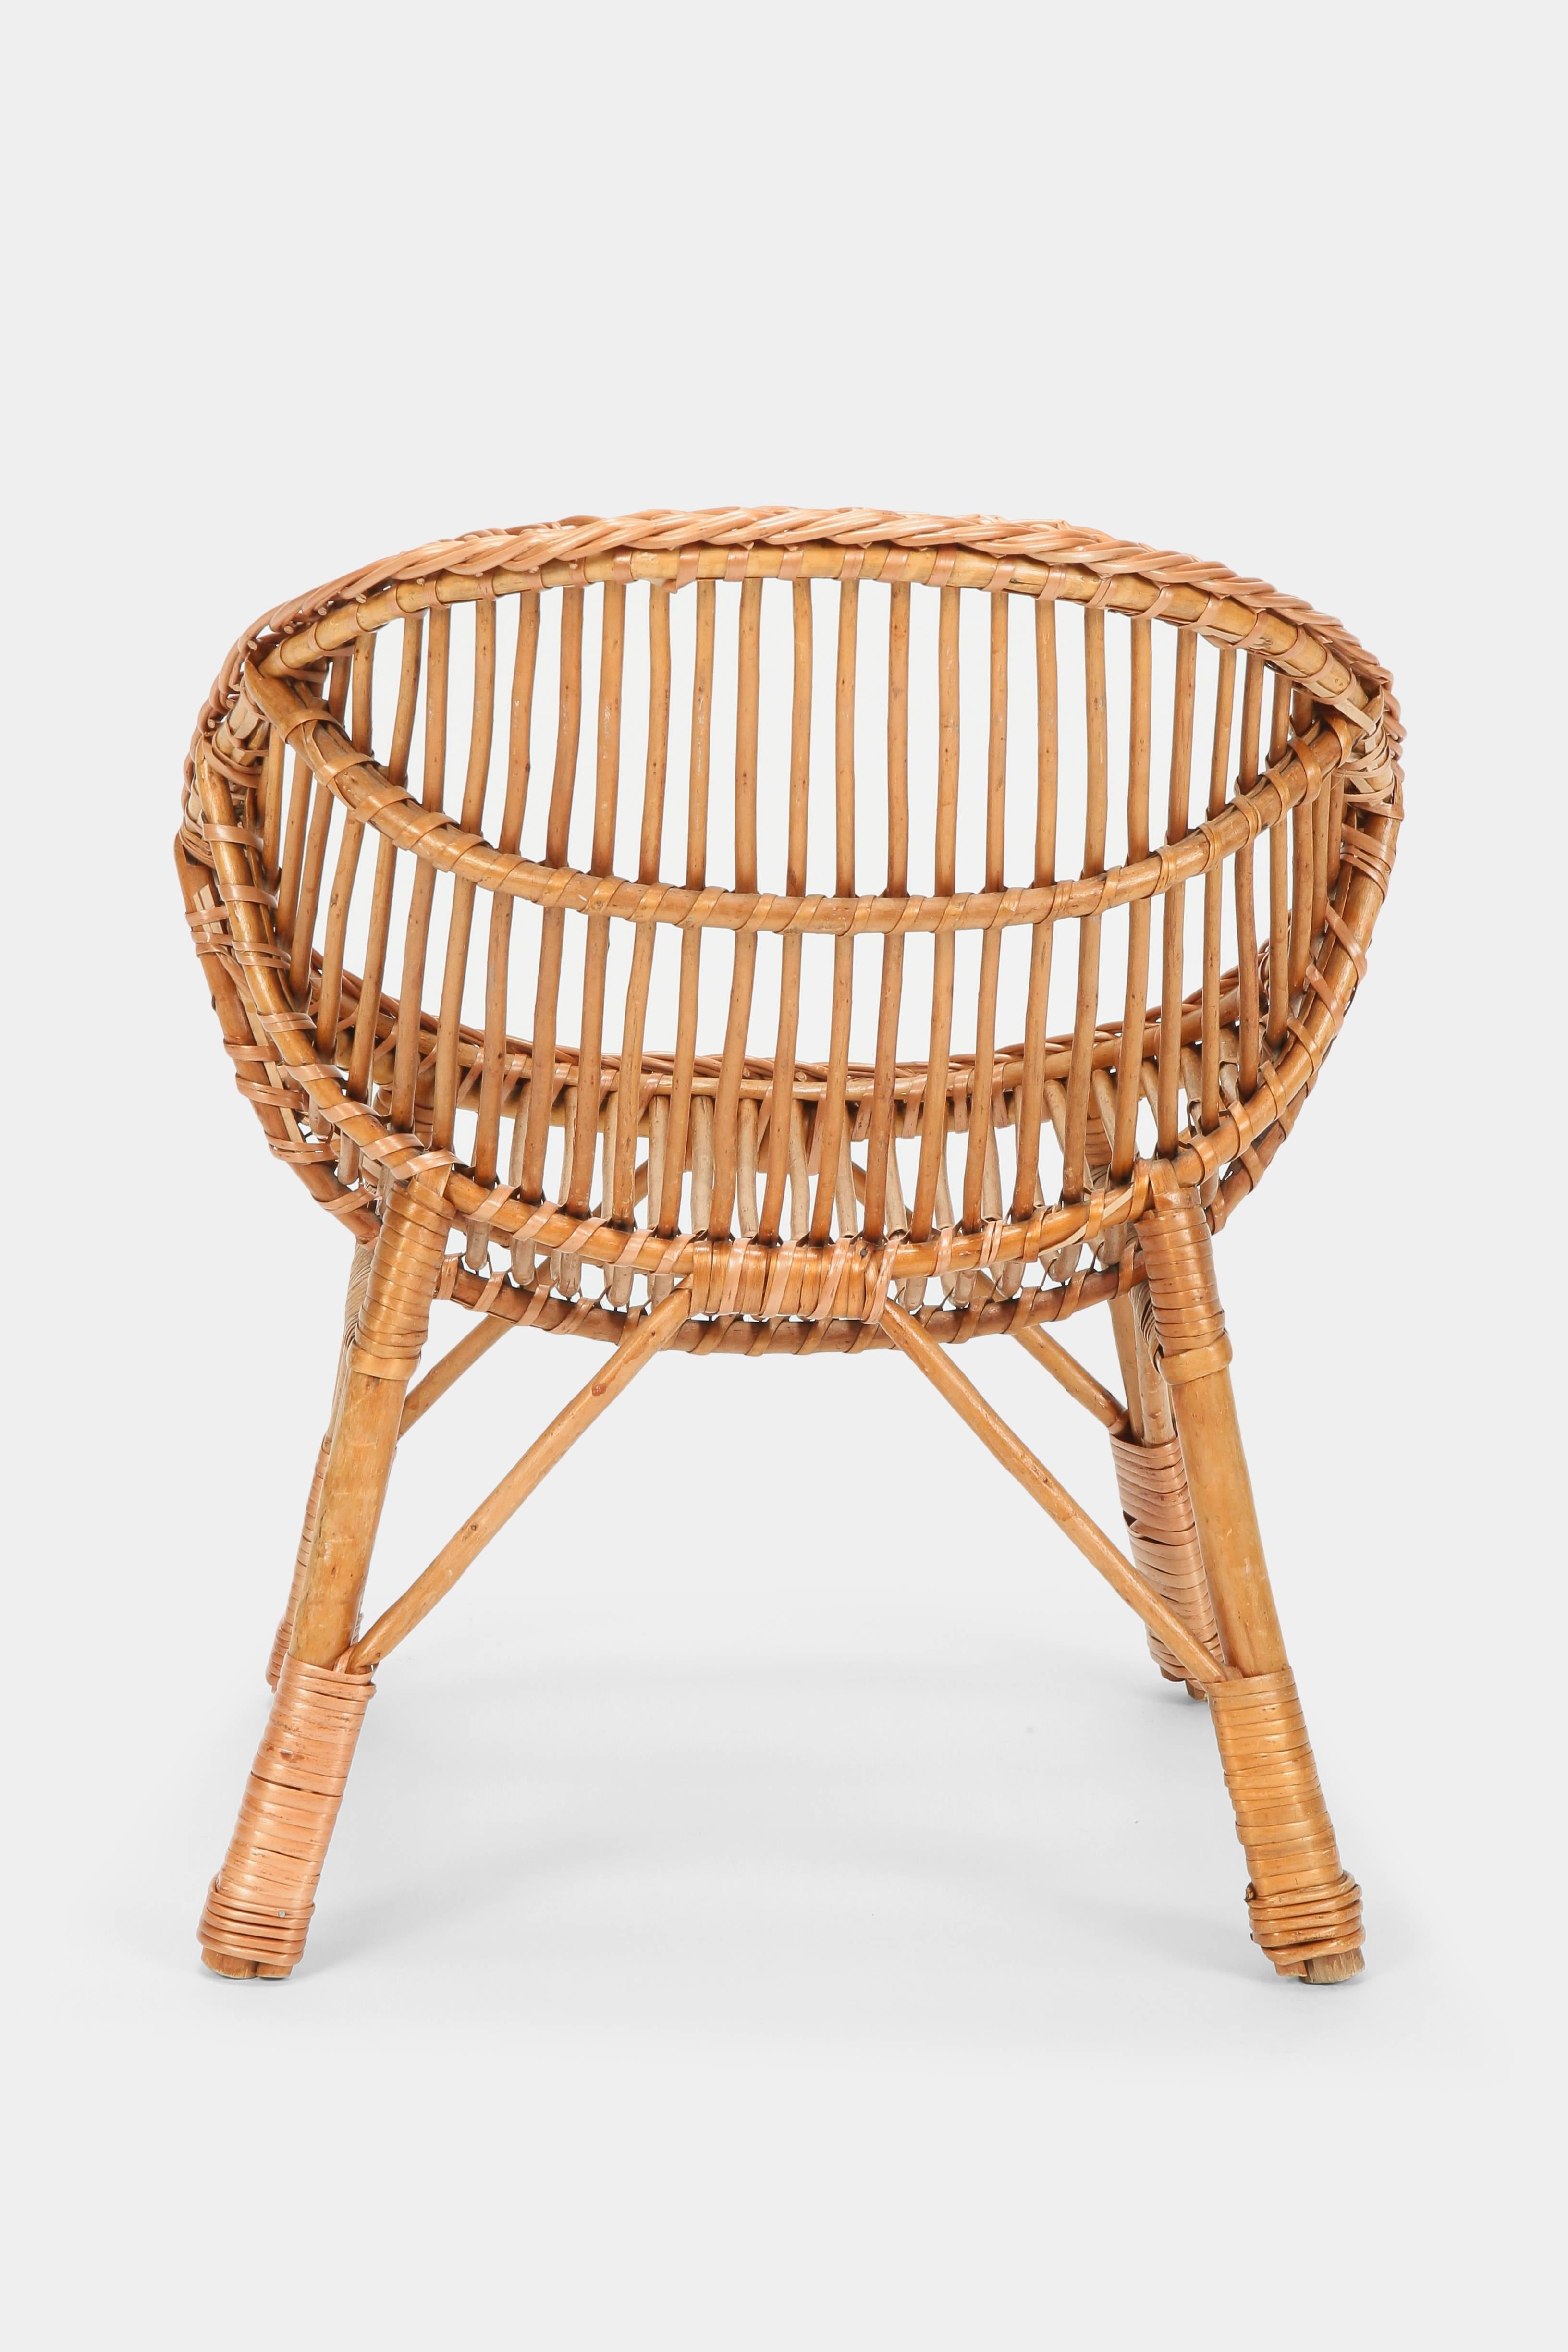 Italian Rattan Children’s Chair 1950s For Sale 1